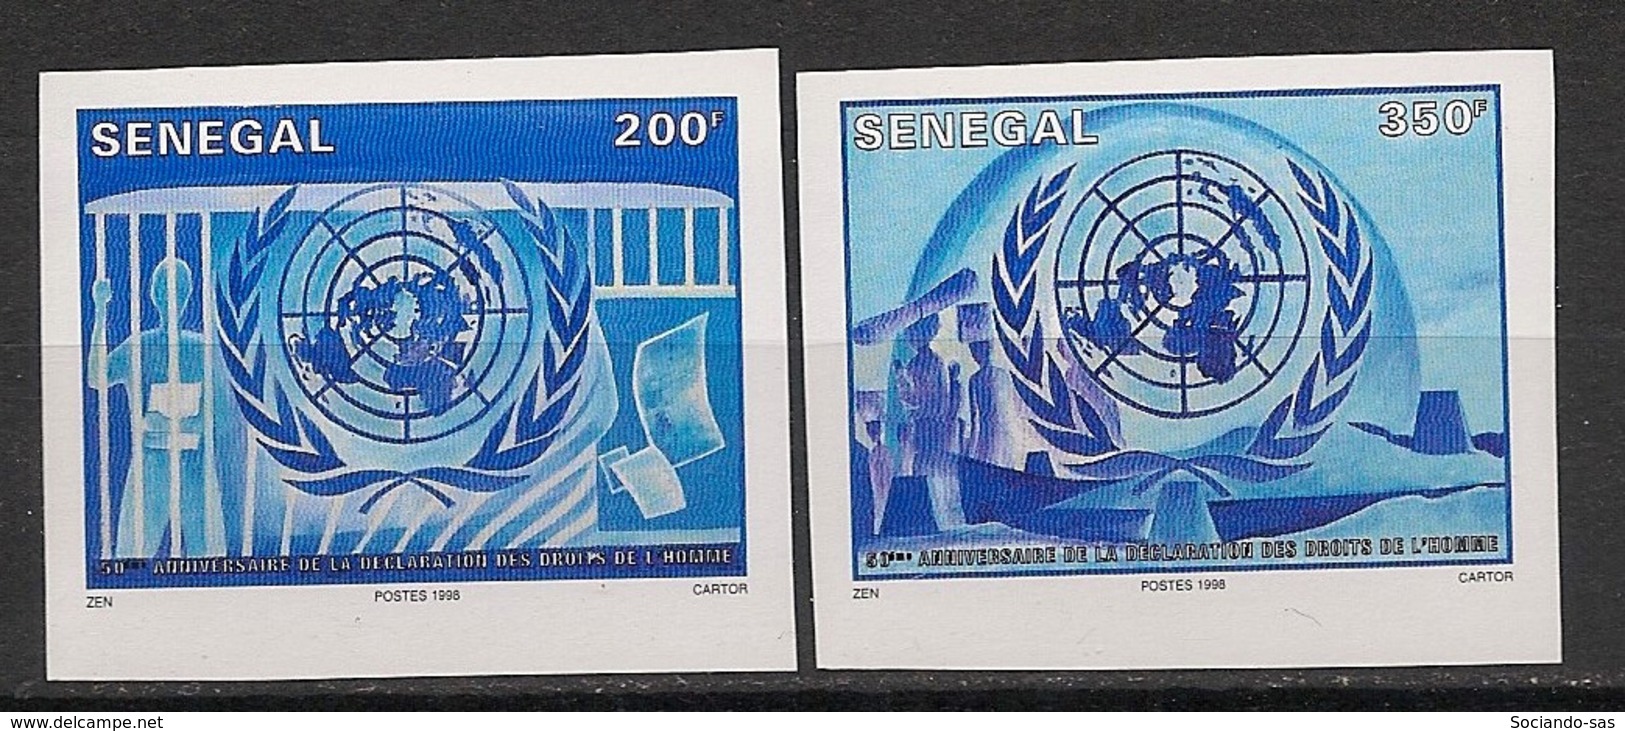 Sénégal - 1998 - N°Yv. 1285AF à 1285AG - ONU / UNO - Non Dentelé / Imperf. - Neuf Luxe ** / MNH / Postfrisch - Senegal (1960-...)